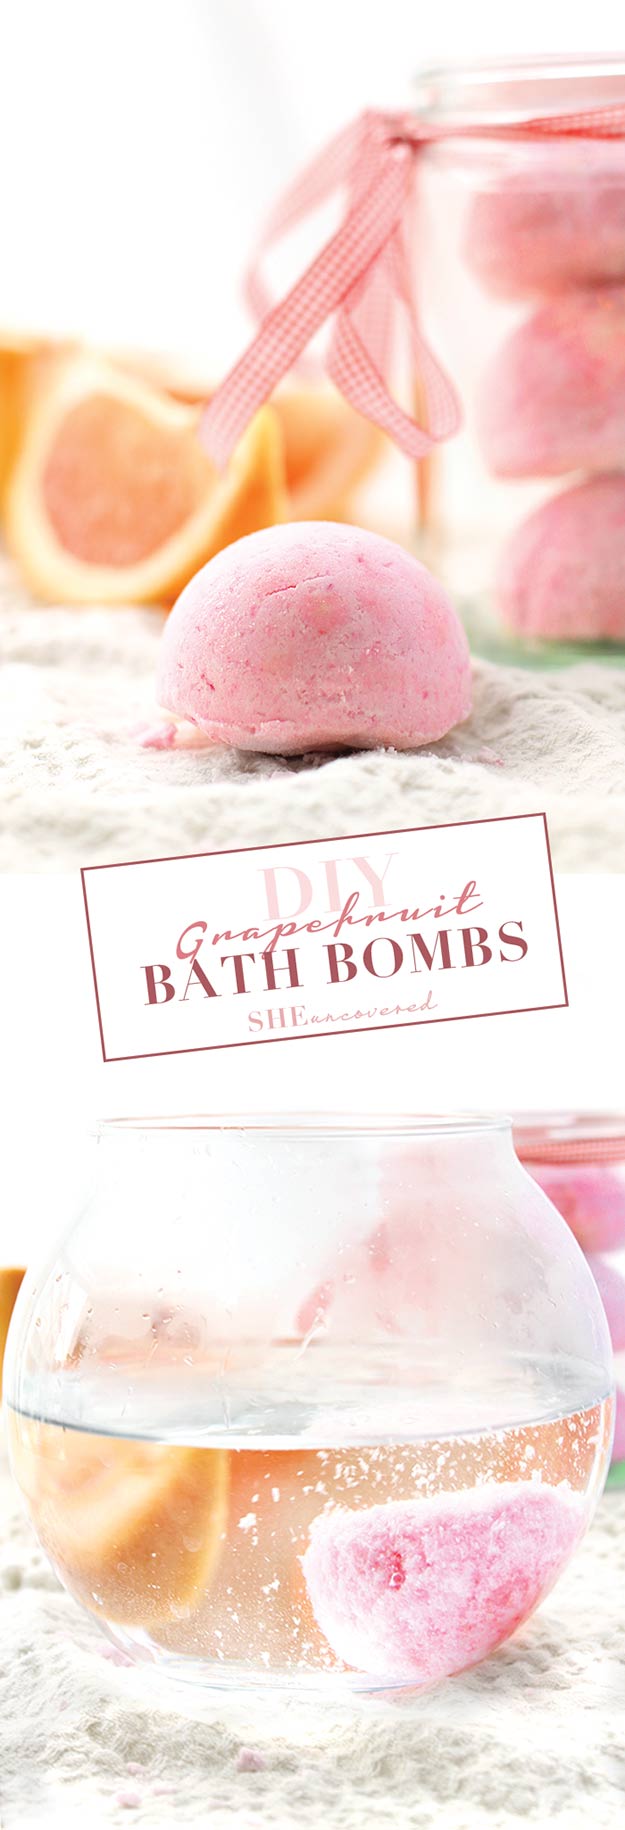 Best DIY Ideas from Pinterest | Homemade Bath Bomb Recipes and Tutorials | Make Grapefruit Bath Bombs at Home Like Lush